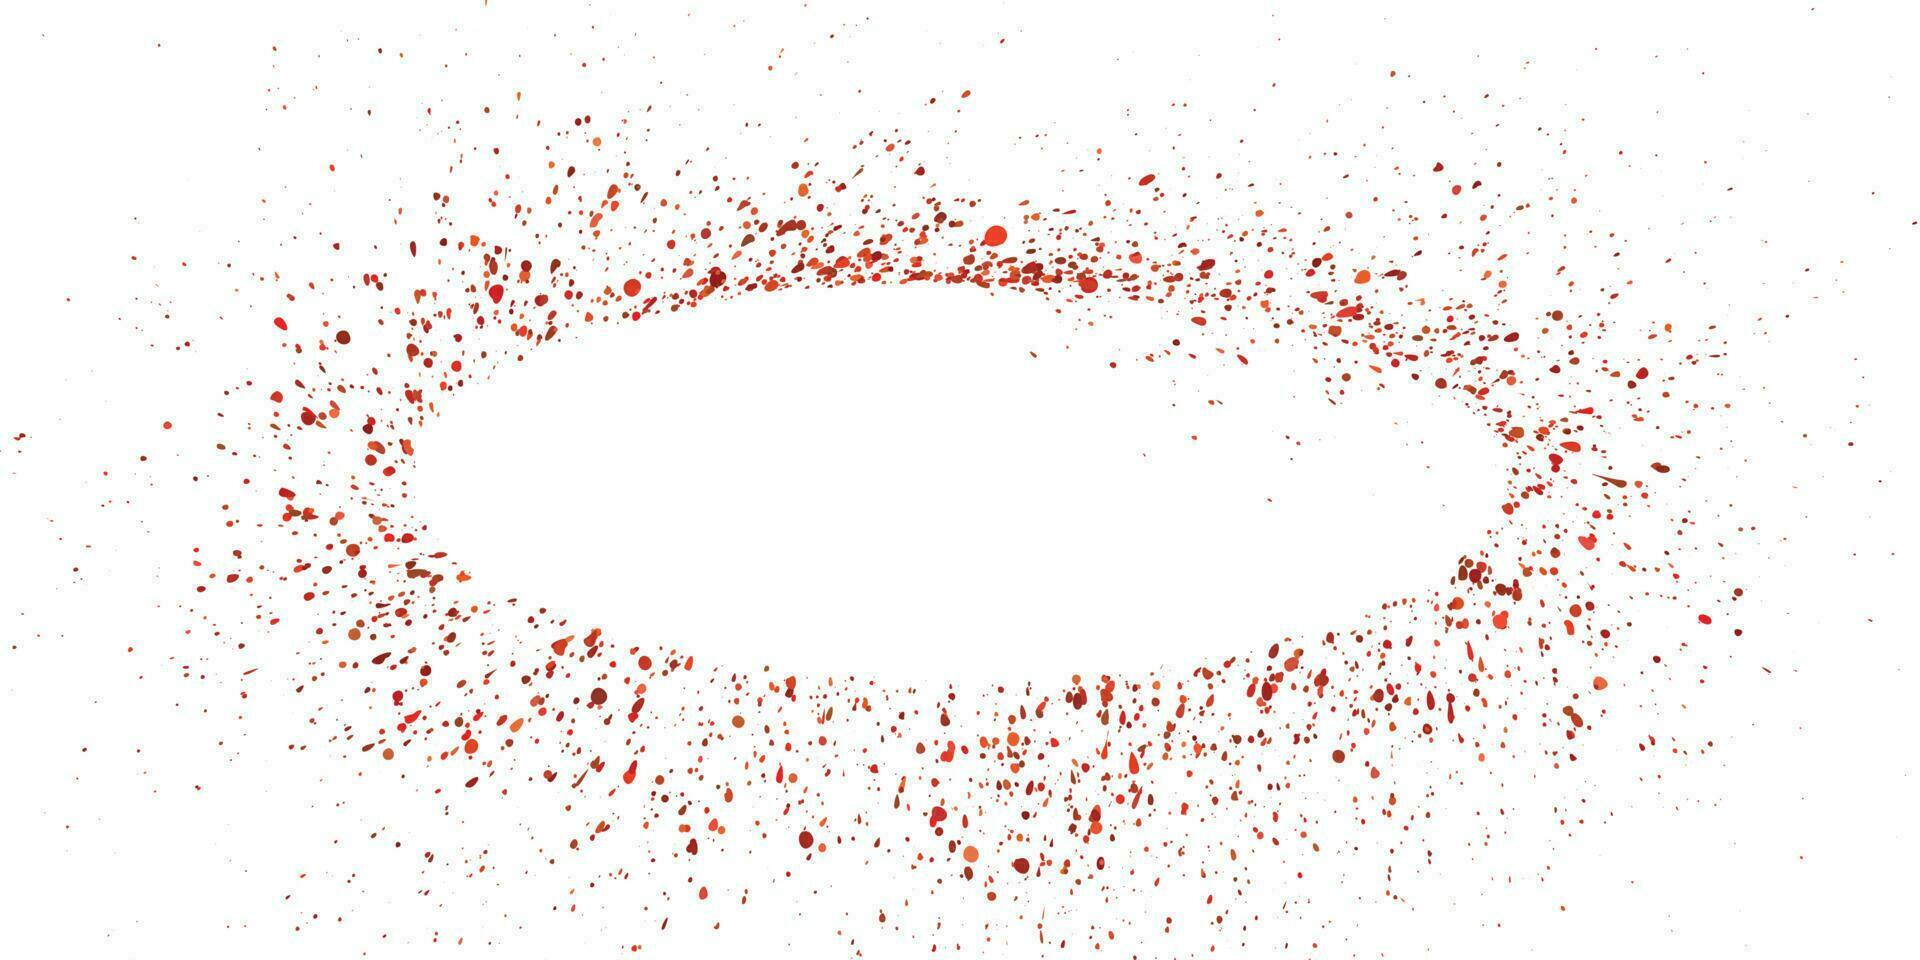 splatter effect of symbol sign with red color blood vector